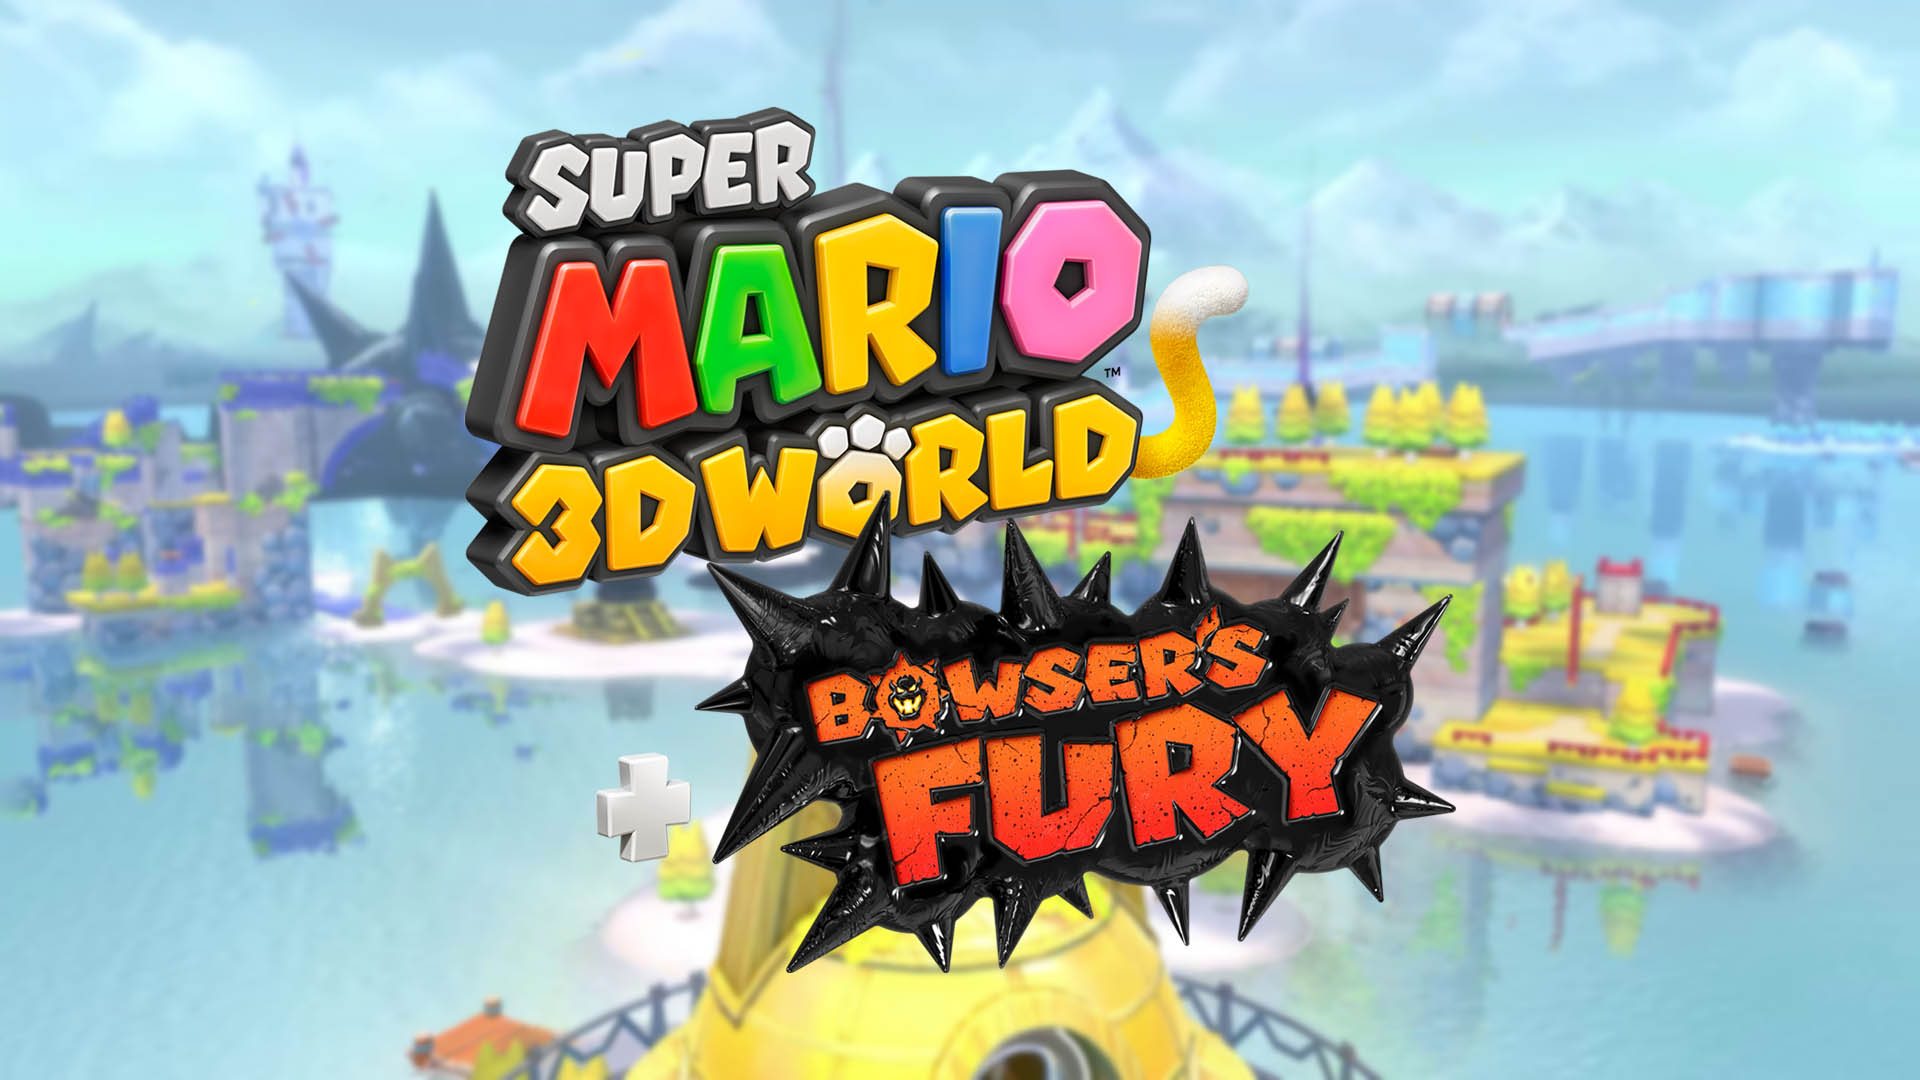 Super Mario 3D World + Bowser's Fury - Launch Trailer - Nintendo